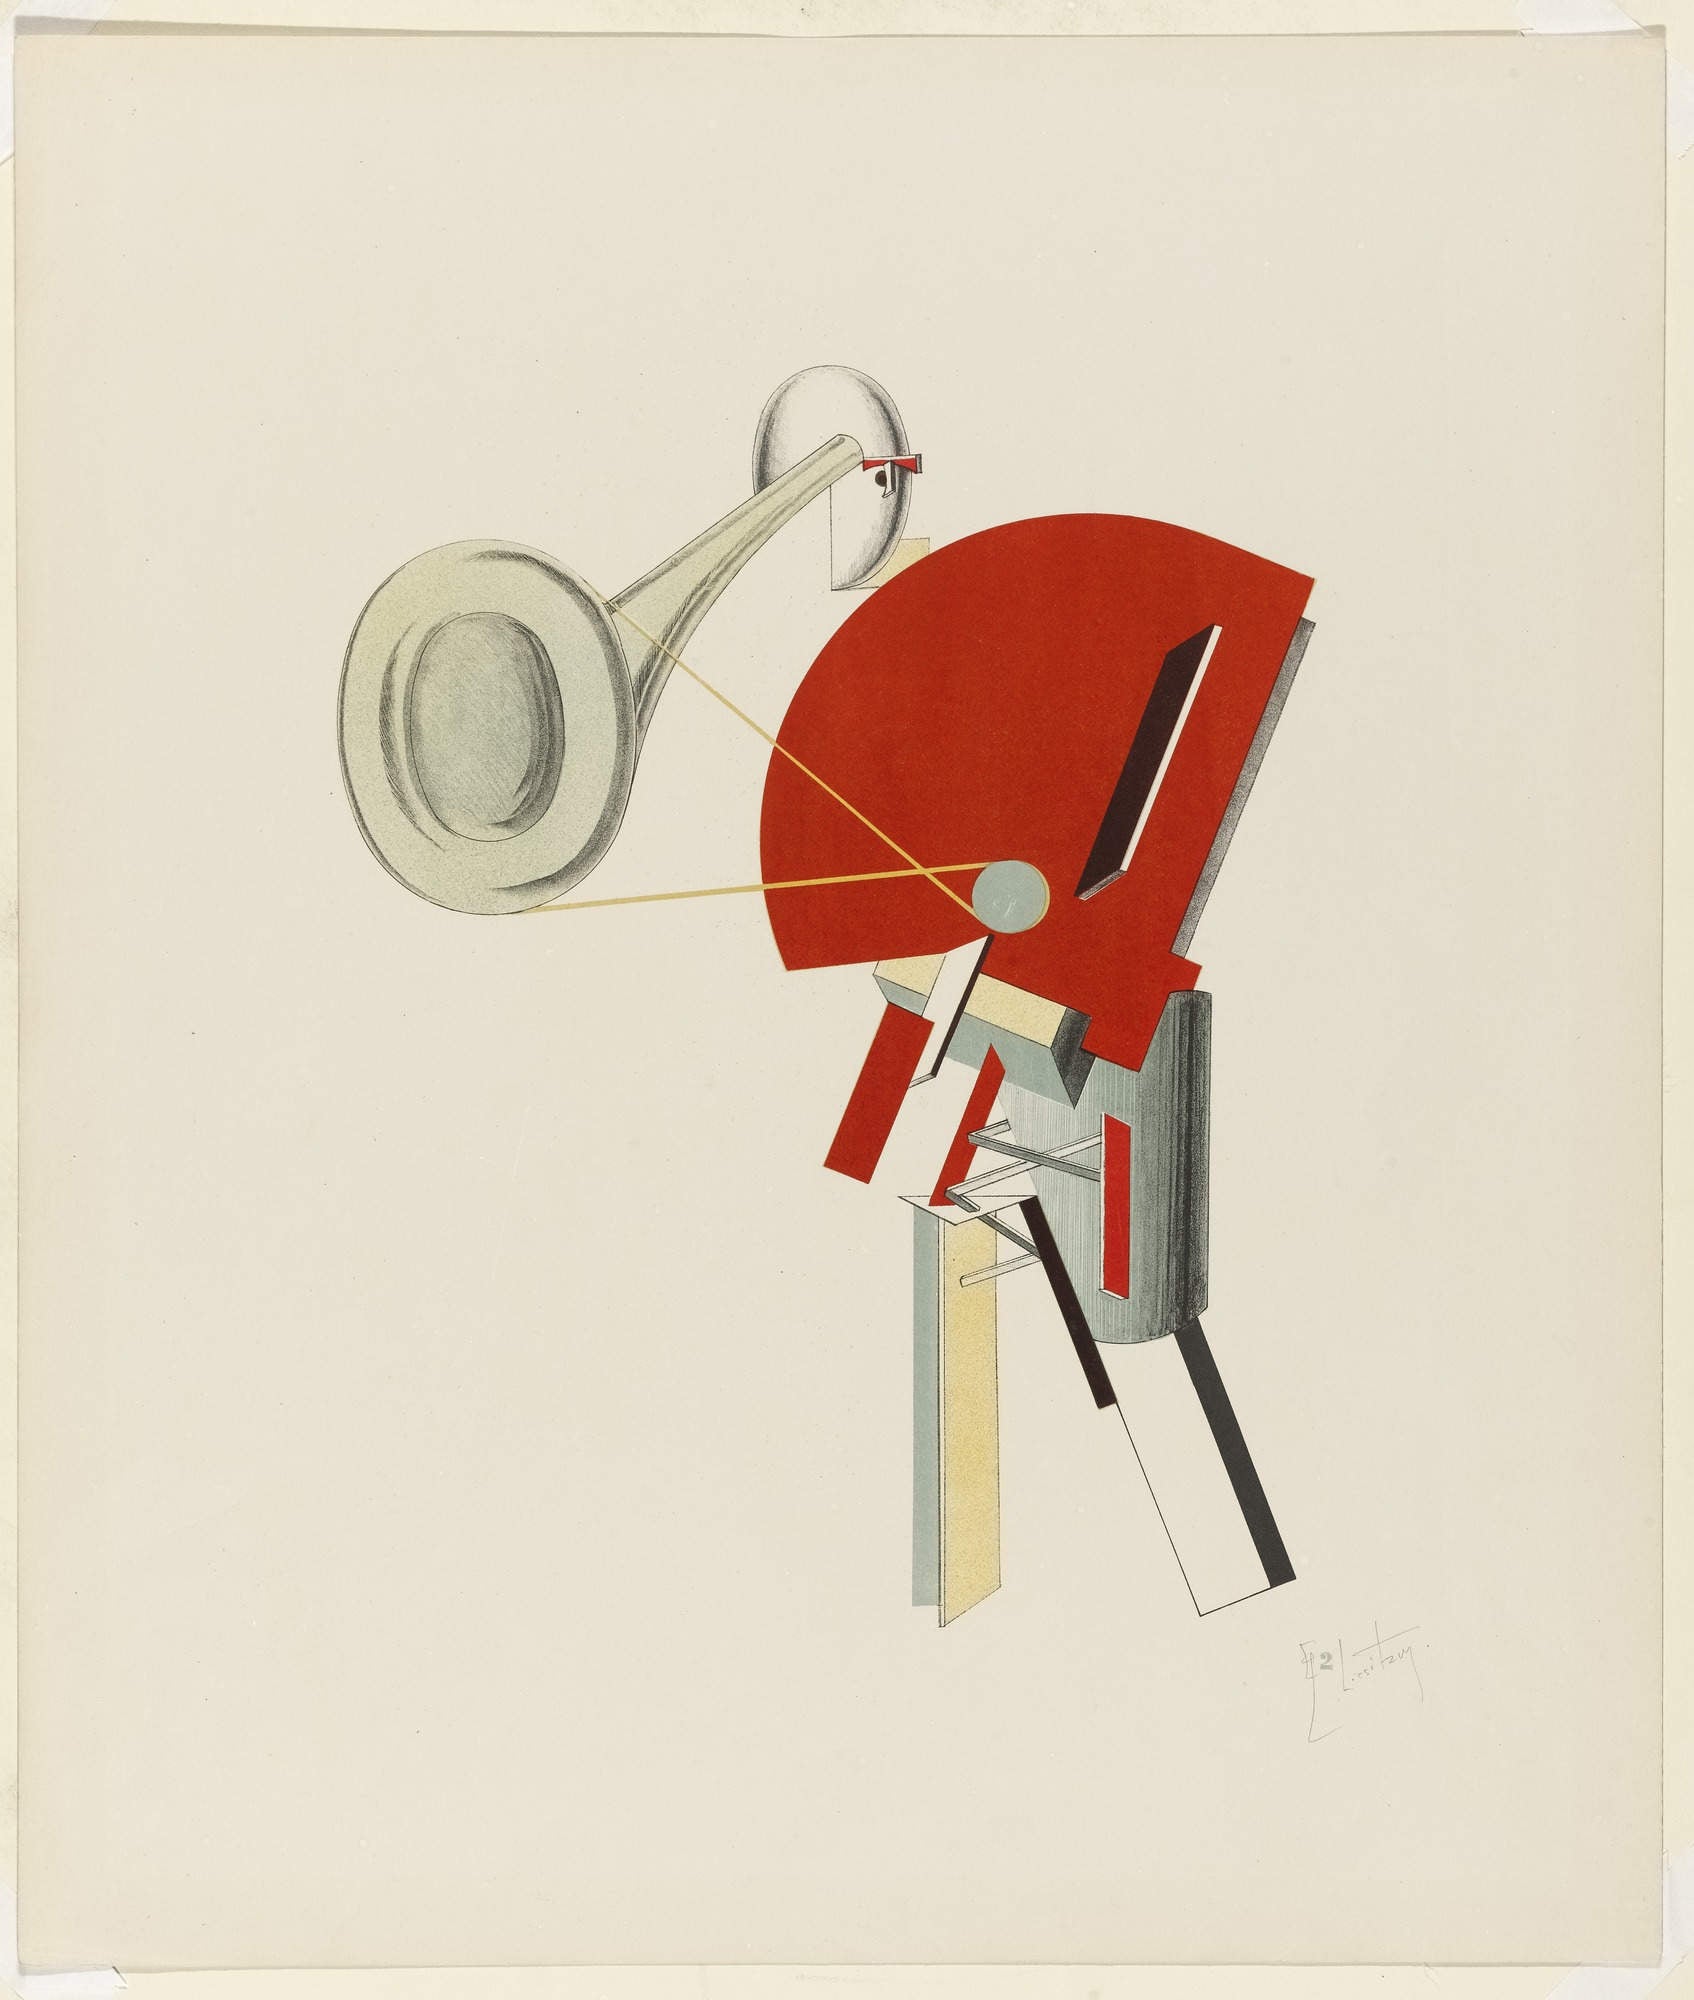 El Lissitzky - Elocutionist